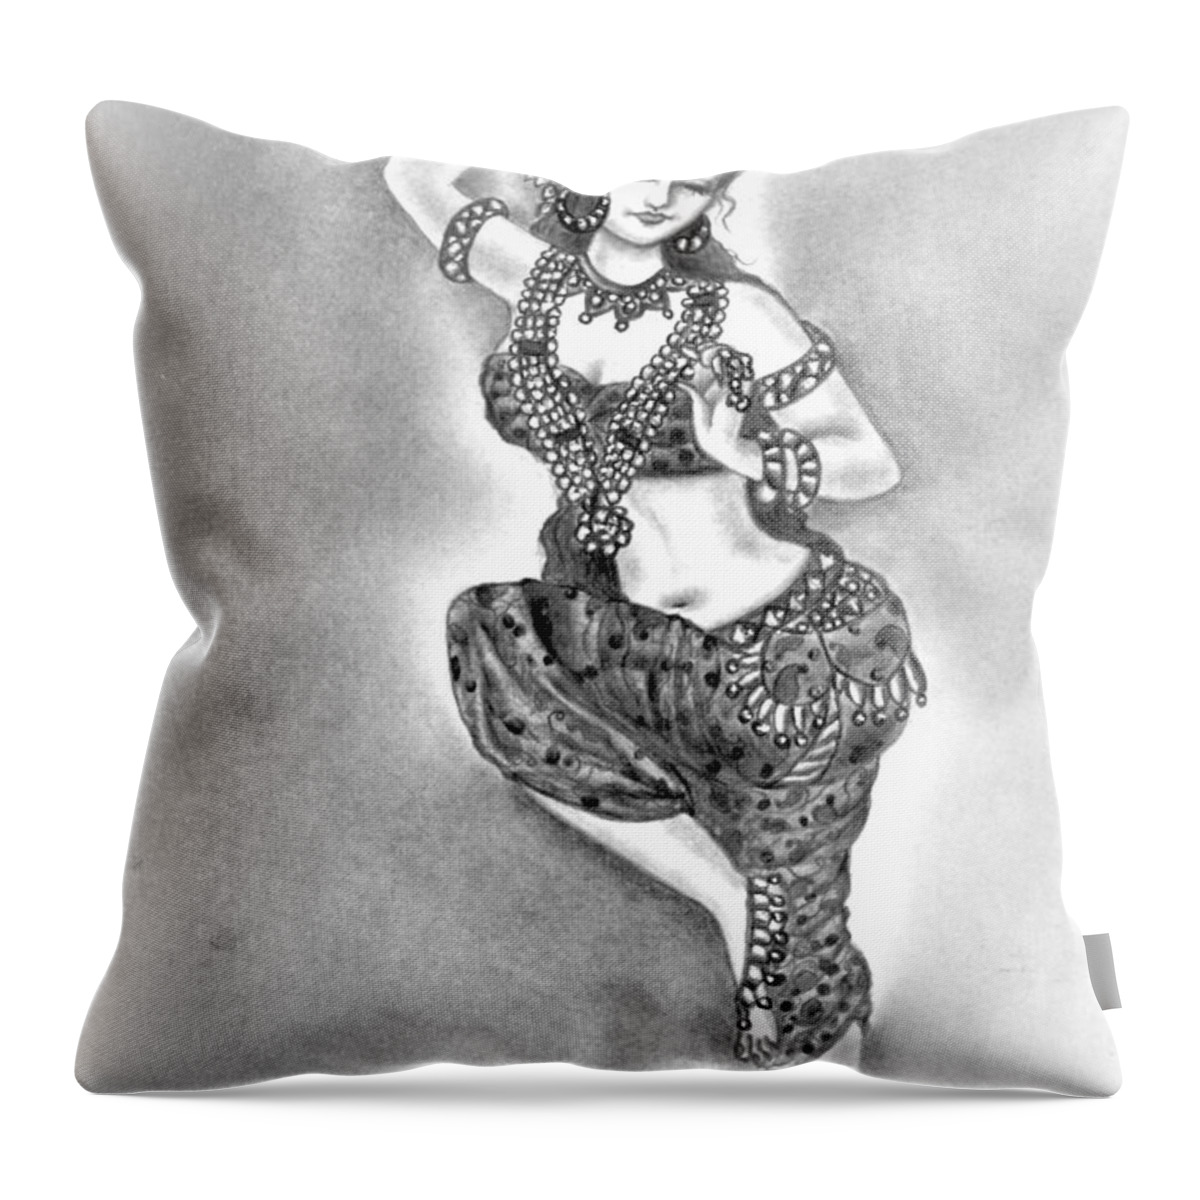 Apsara Throw Pillow featuring the drawing Celestial dancer by Tara Krishna